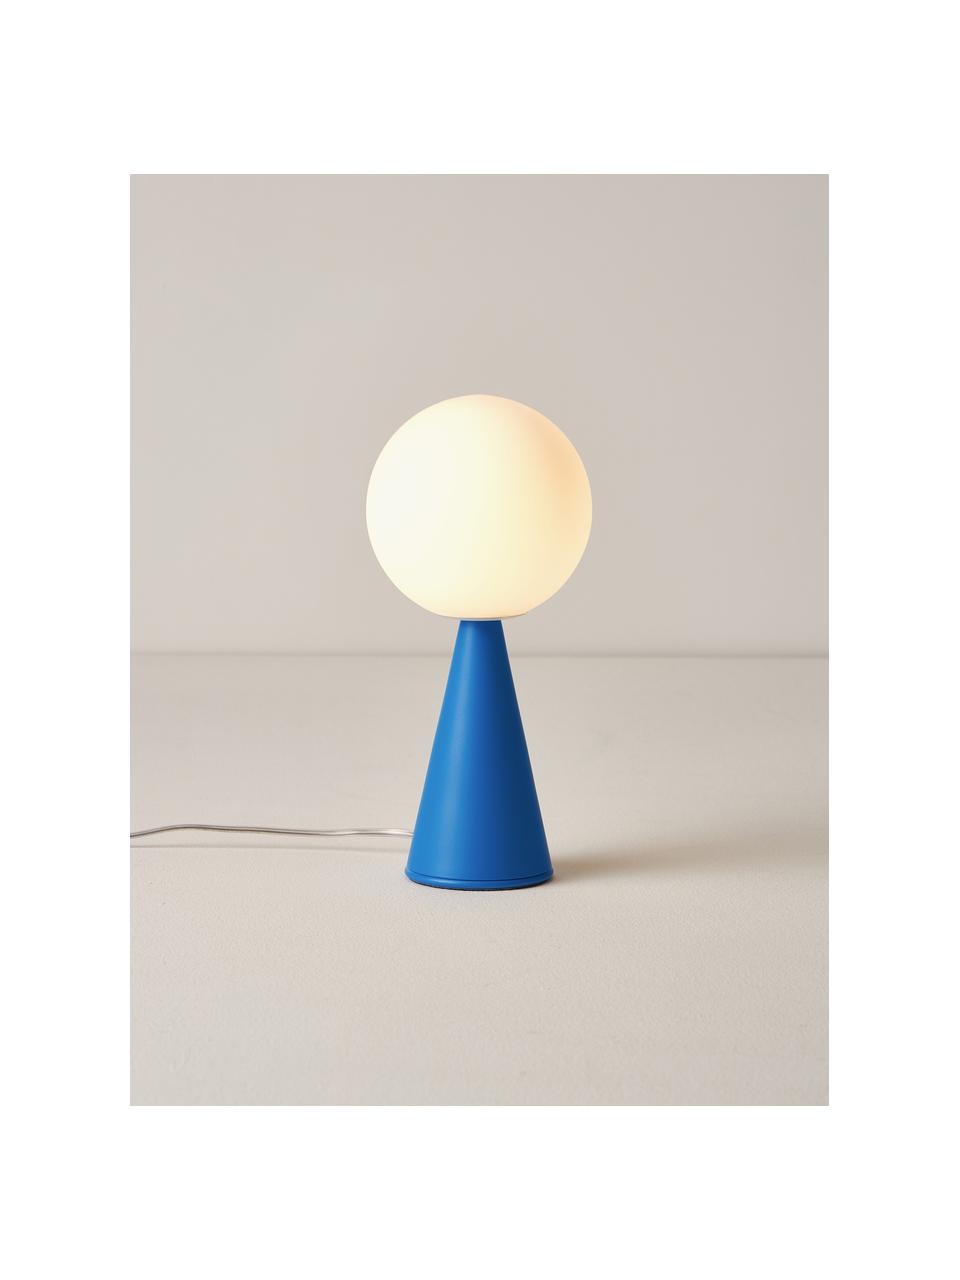 Petite lampe à poser artisanale Bilia, Blanc, bleu, Ø 12 x haut. 26 cm